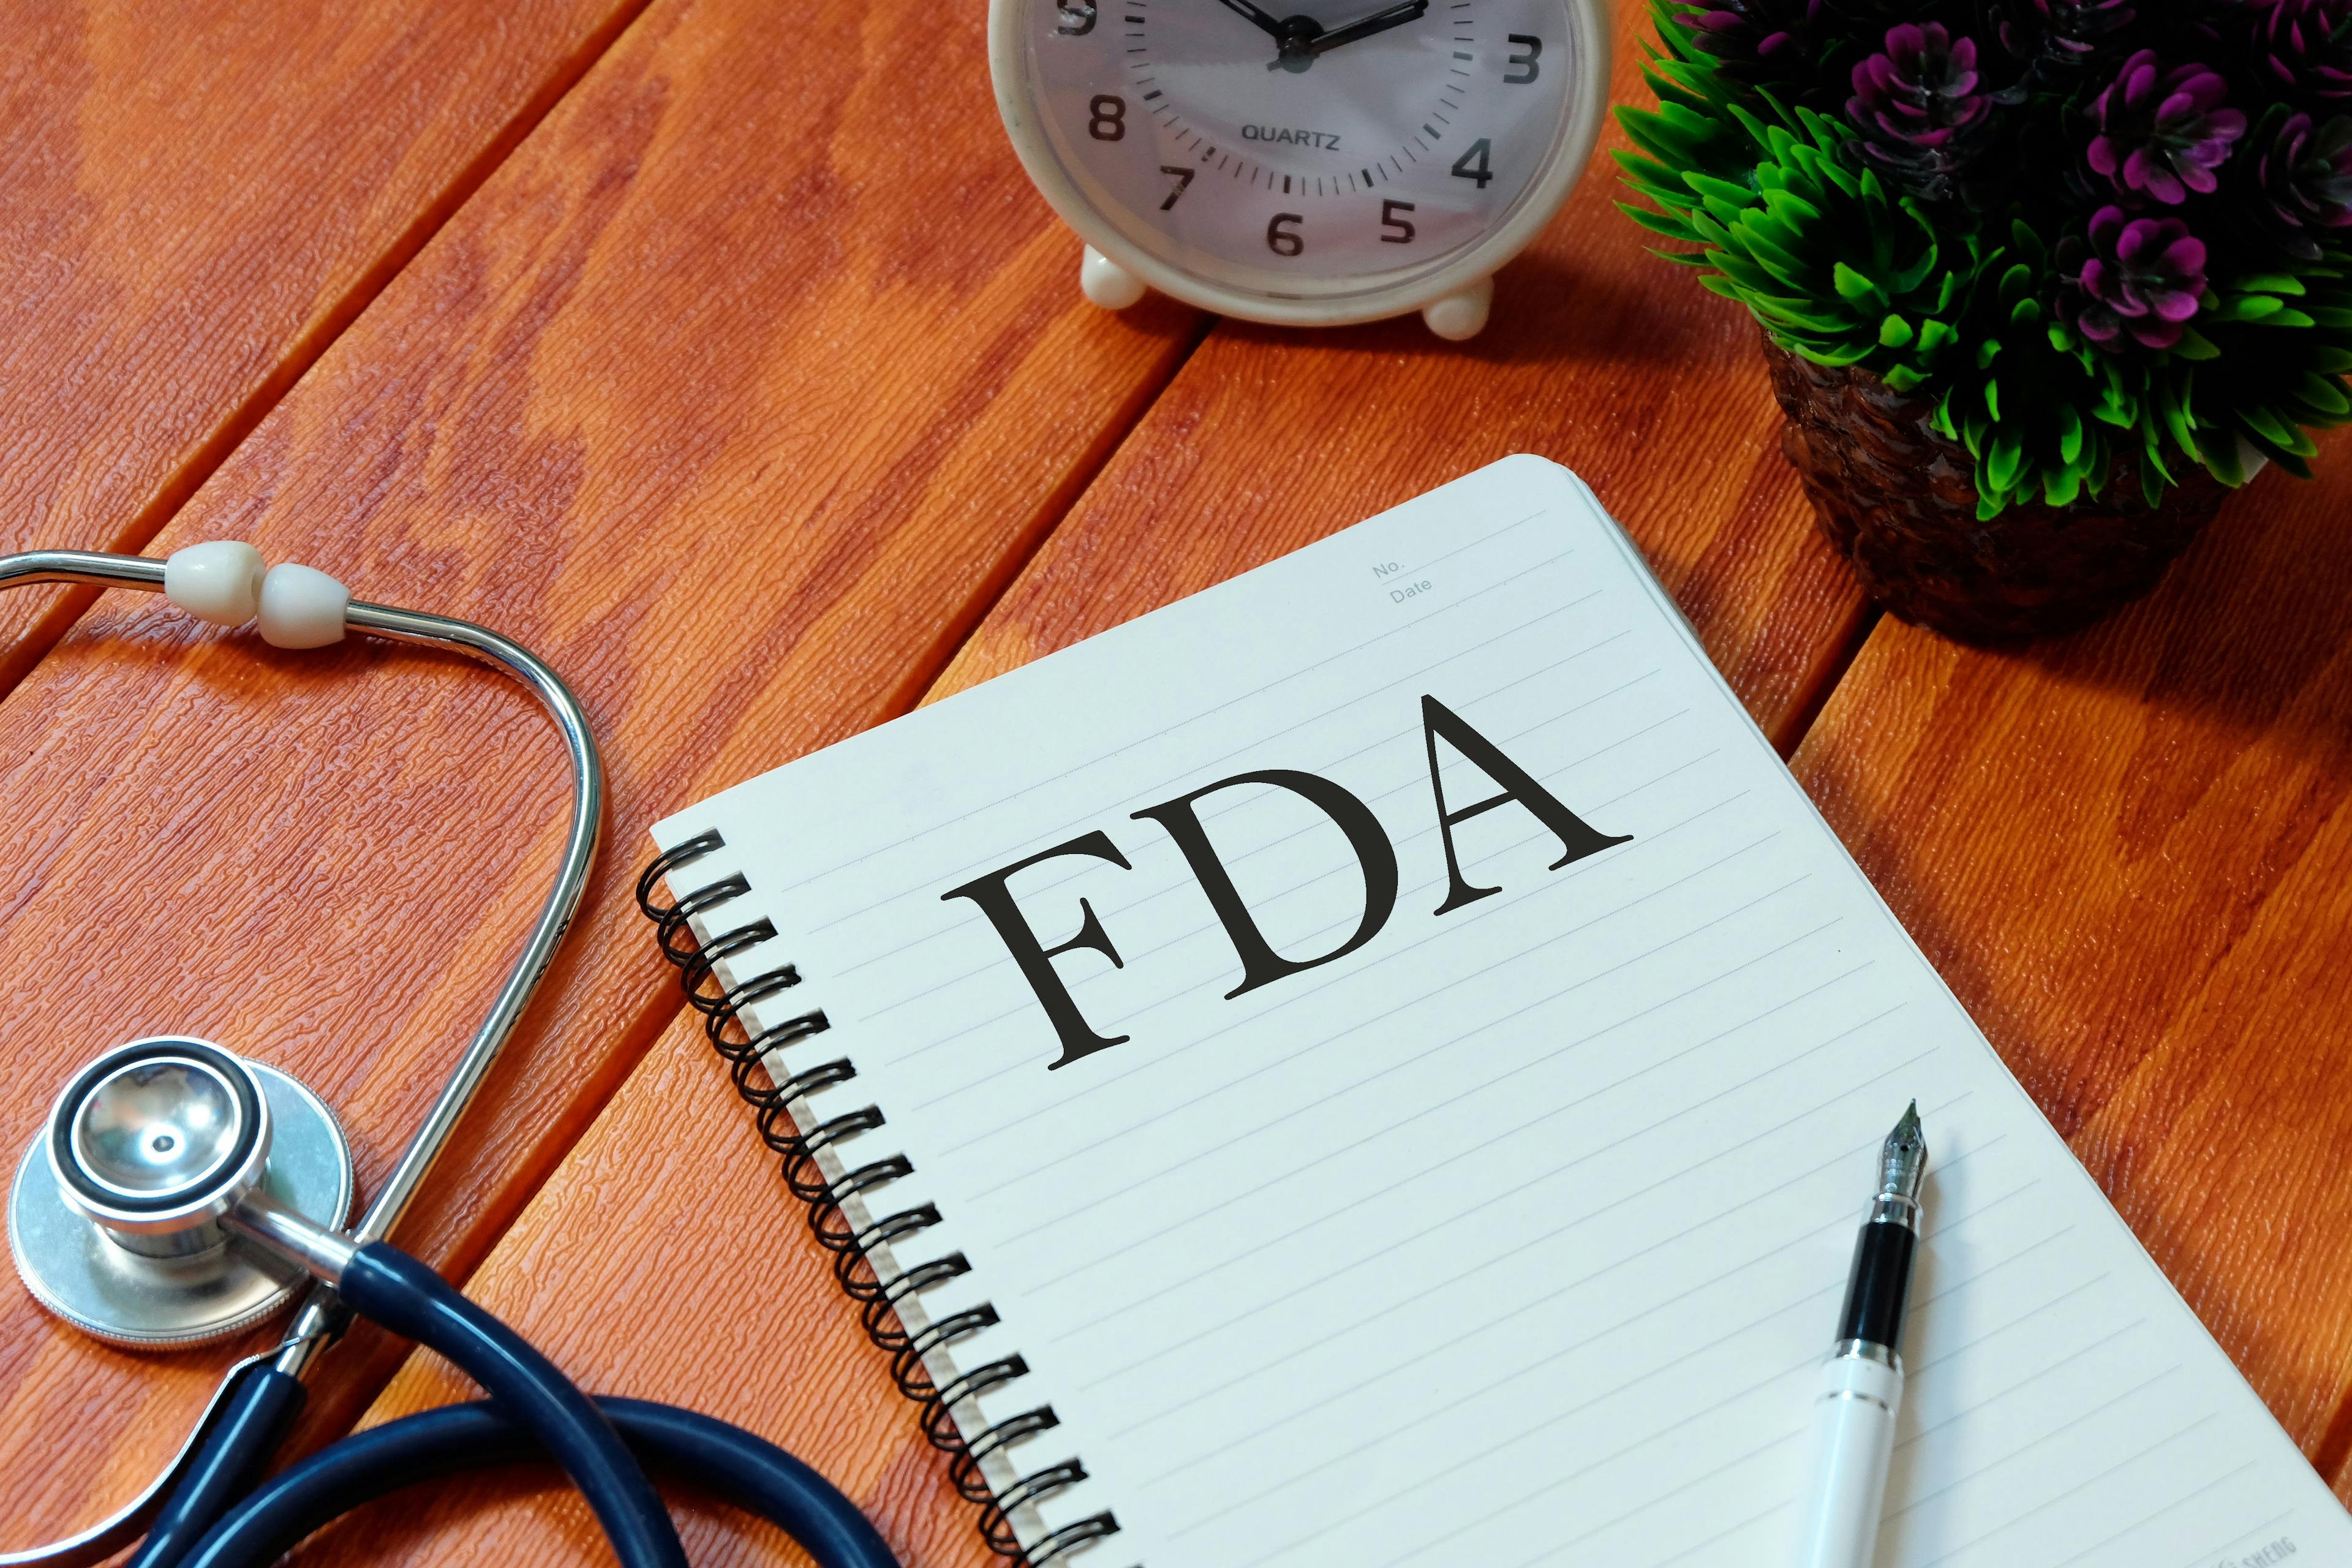 Standardize PROs, Says FDA Draft Guidance